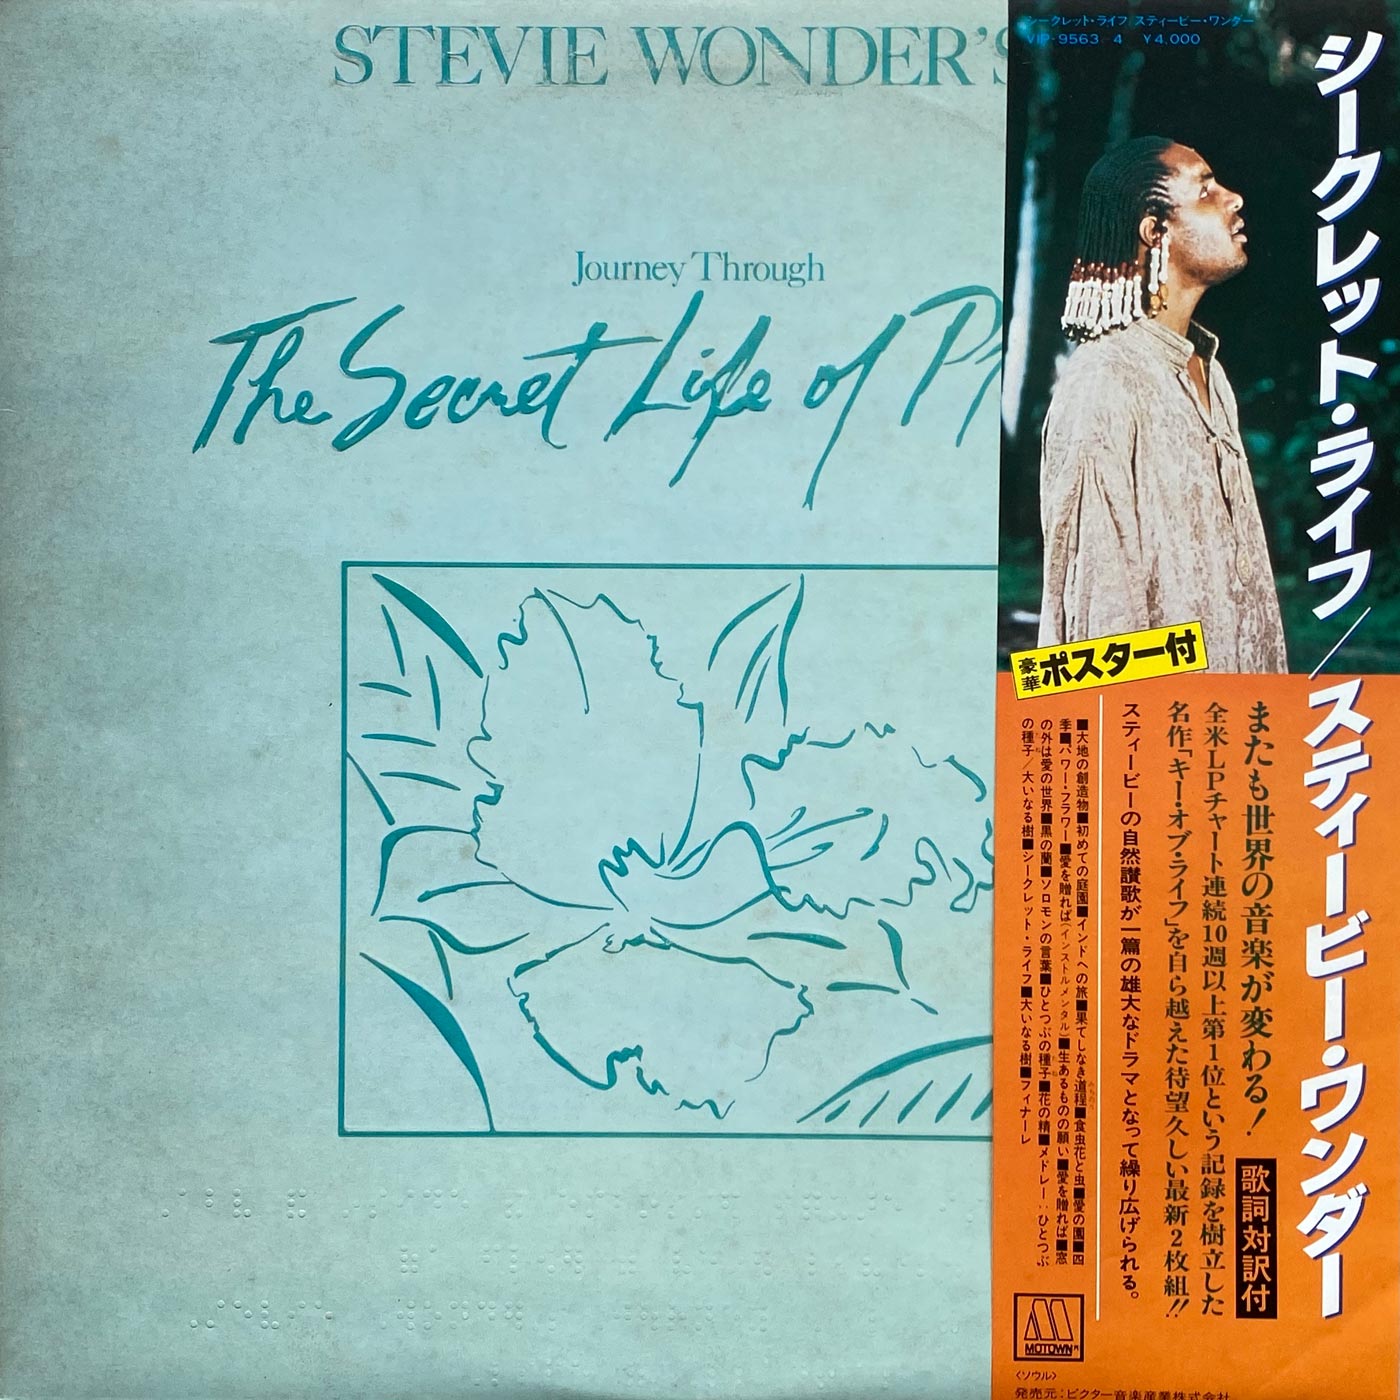 Stevie Wonder - Journey Through The Secret Life of Plants